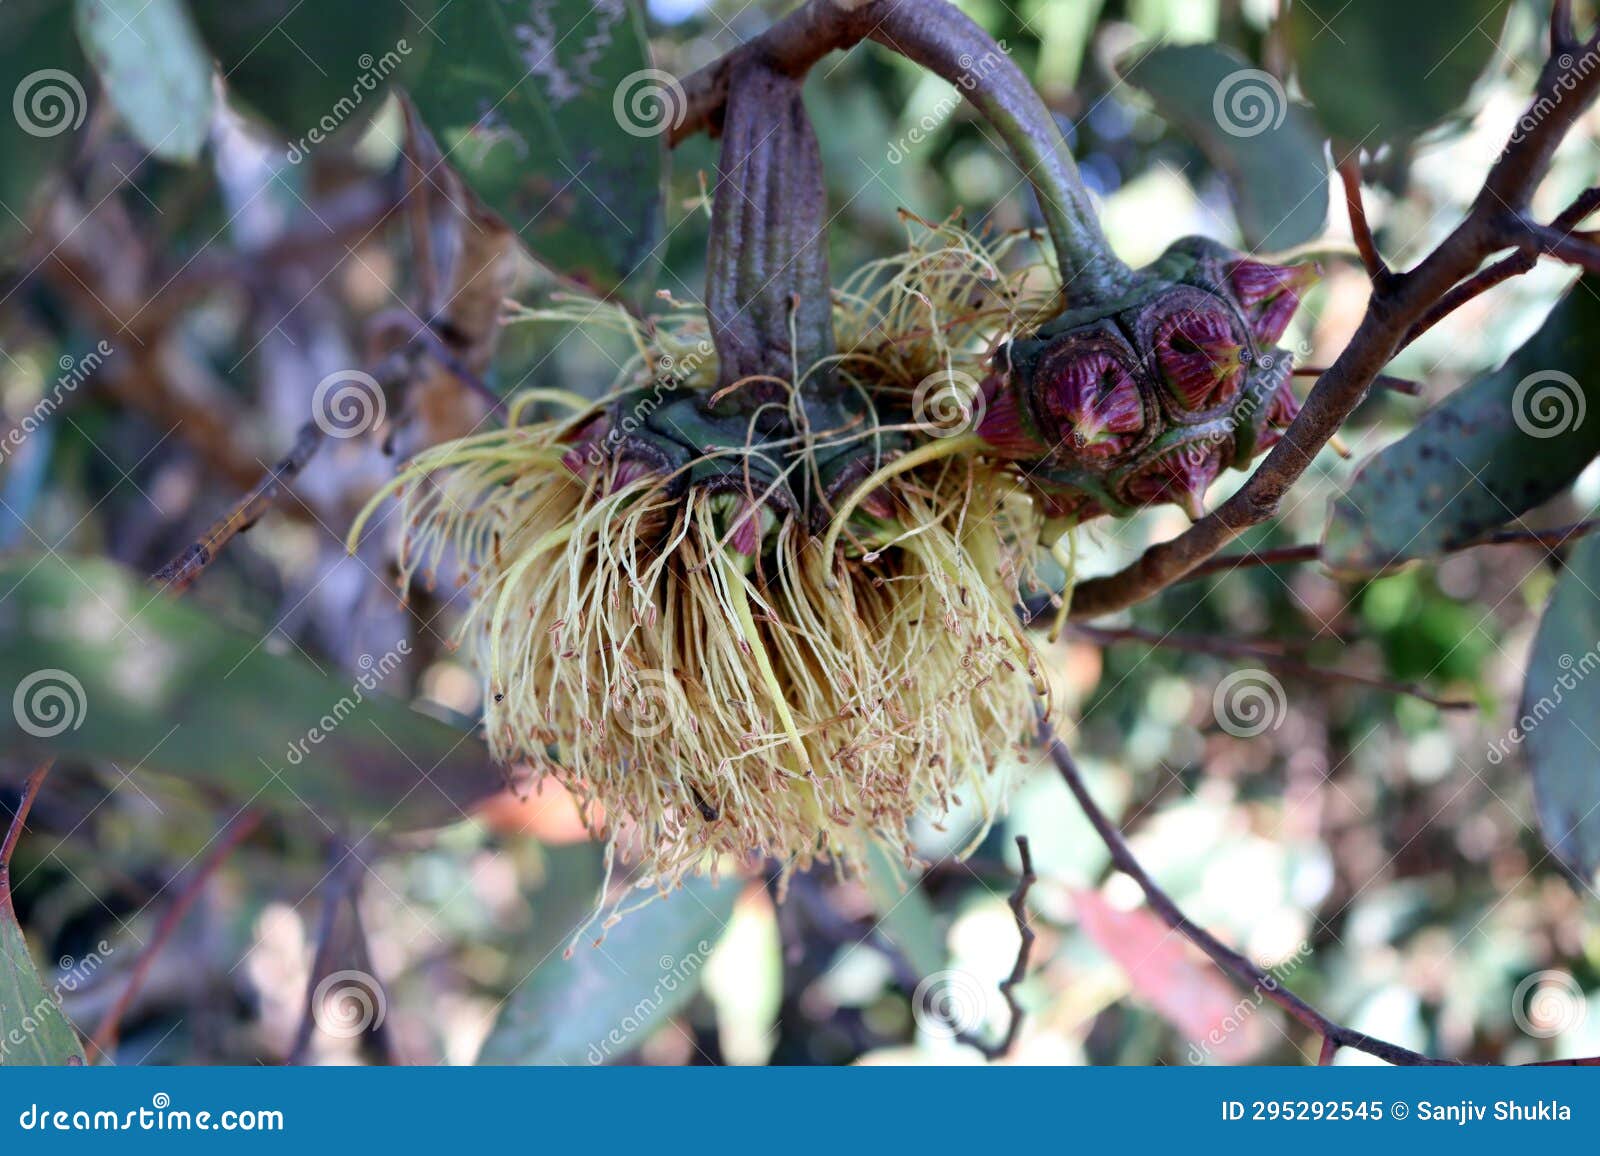 bushy yate (eucalyptus lehmannii) fruits with stamens still attached : (pix sanjiv shukla)